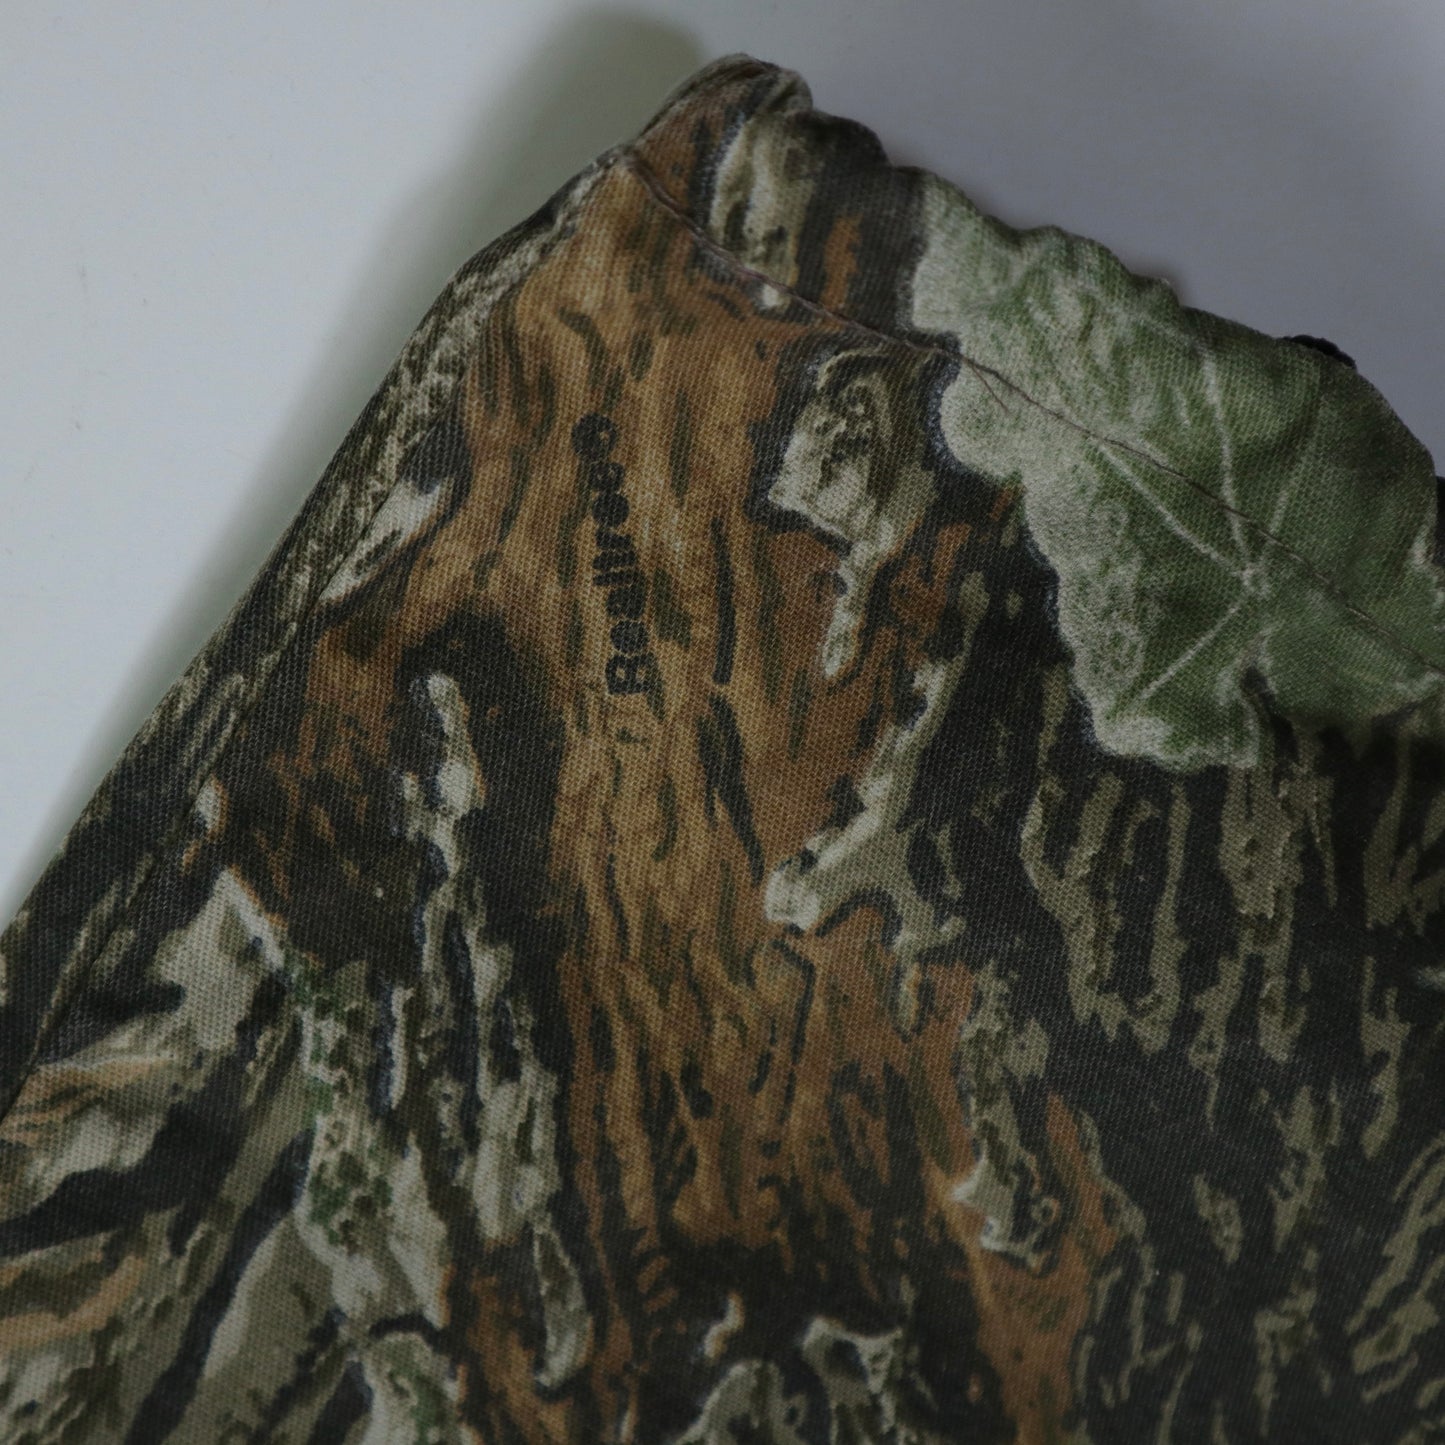 (35-36W) 90s Liberty American-made jungle camouflage large pocket tree pattern pants